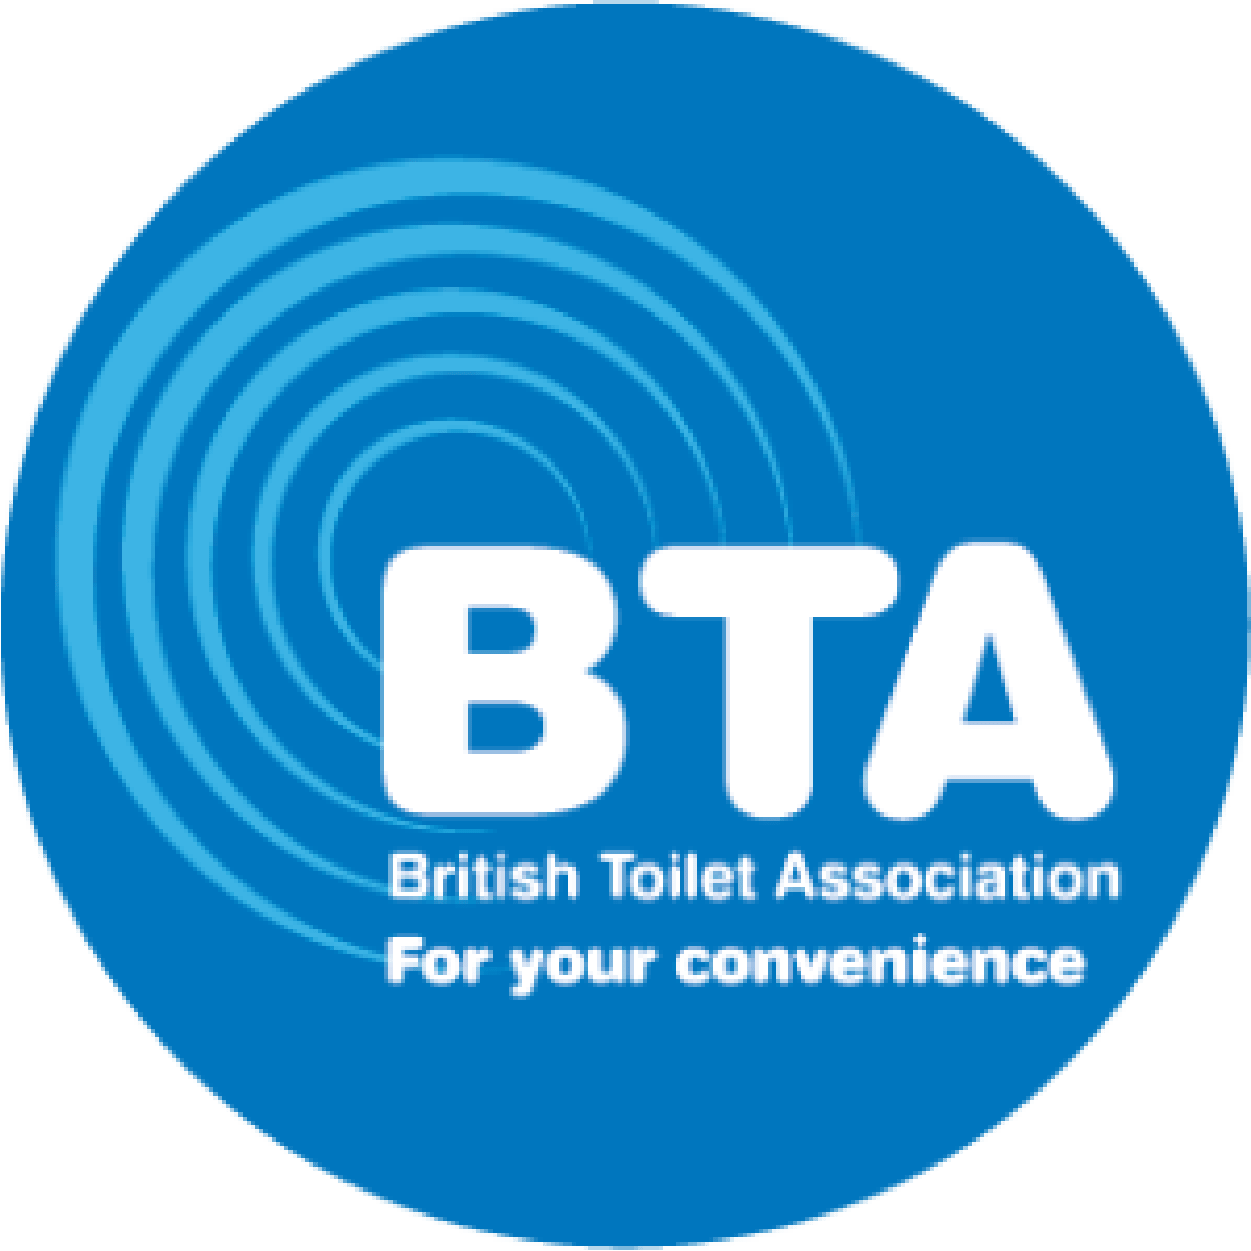 BTA blue logo on white background.